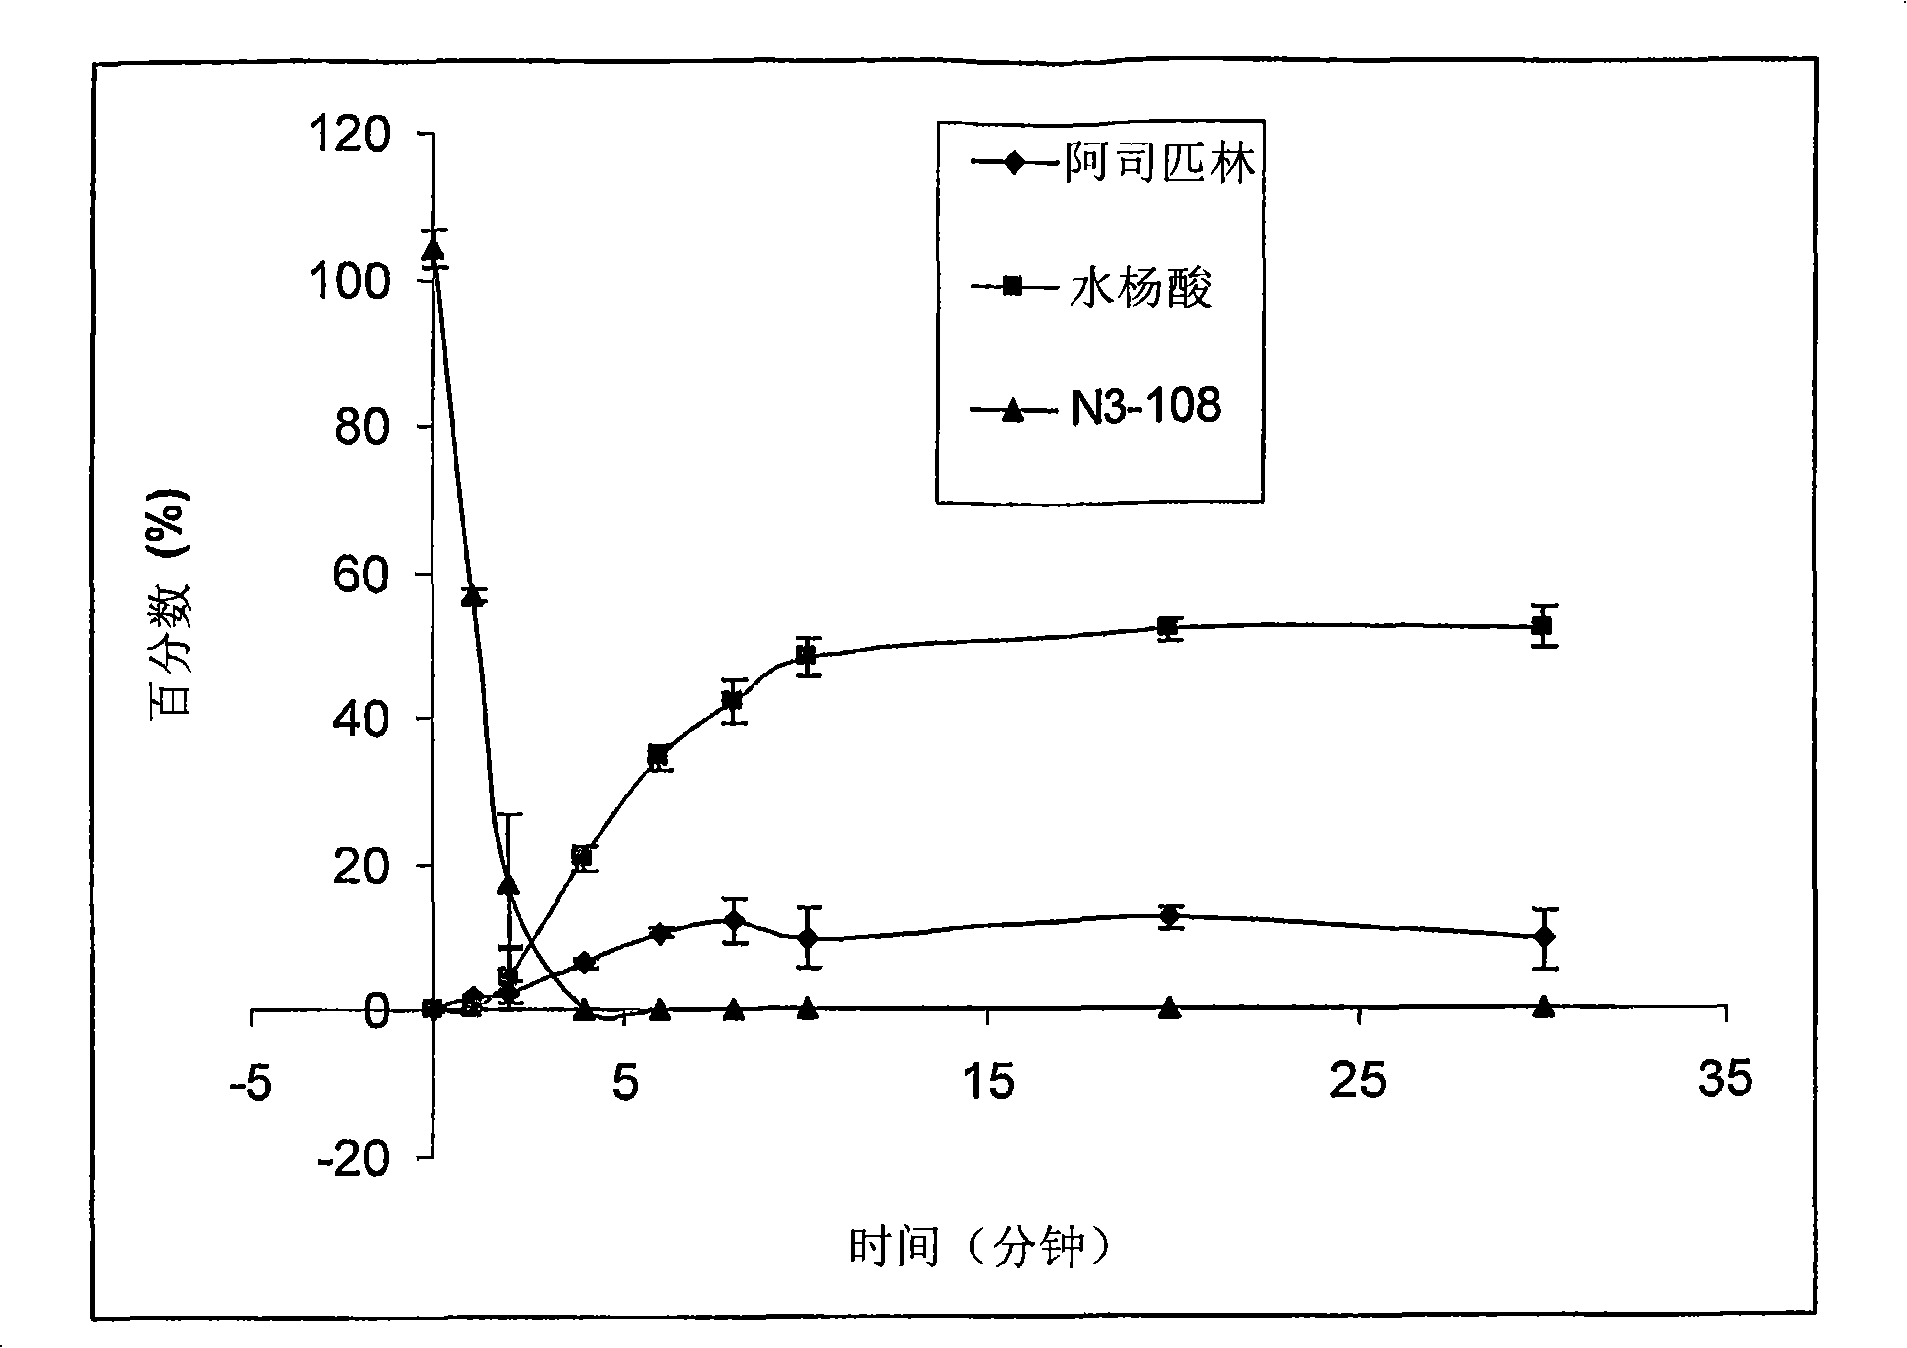 Development of prodrugs possessing a nitric oxide donor diazen-1-ium-1,2-diolate moiety using in vitro/in silico predictions